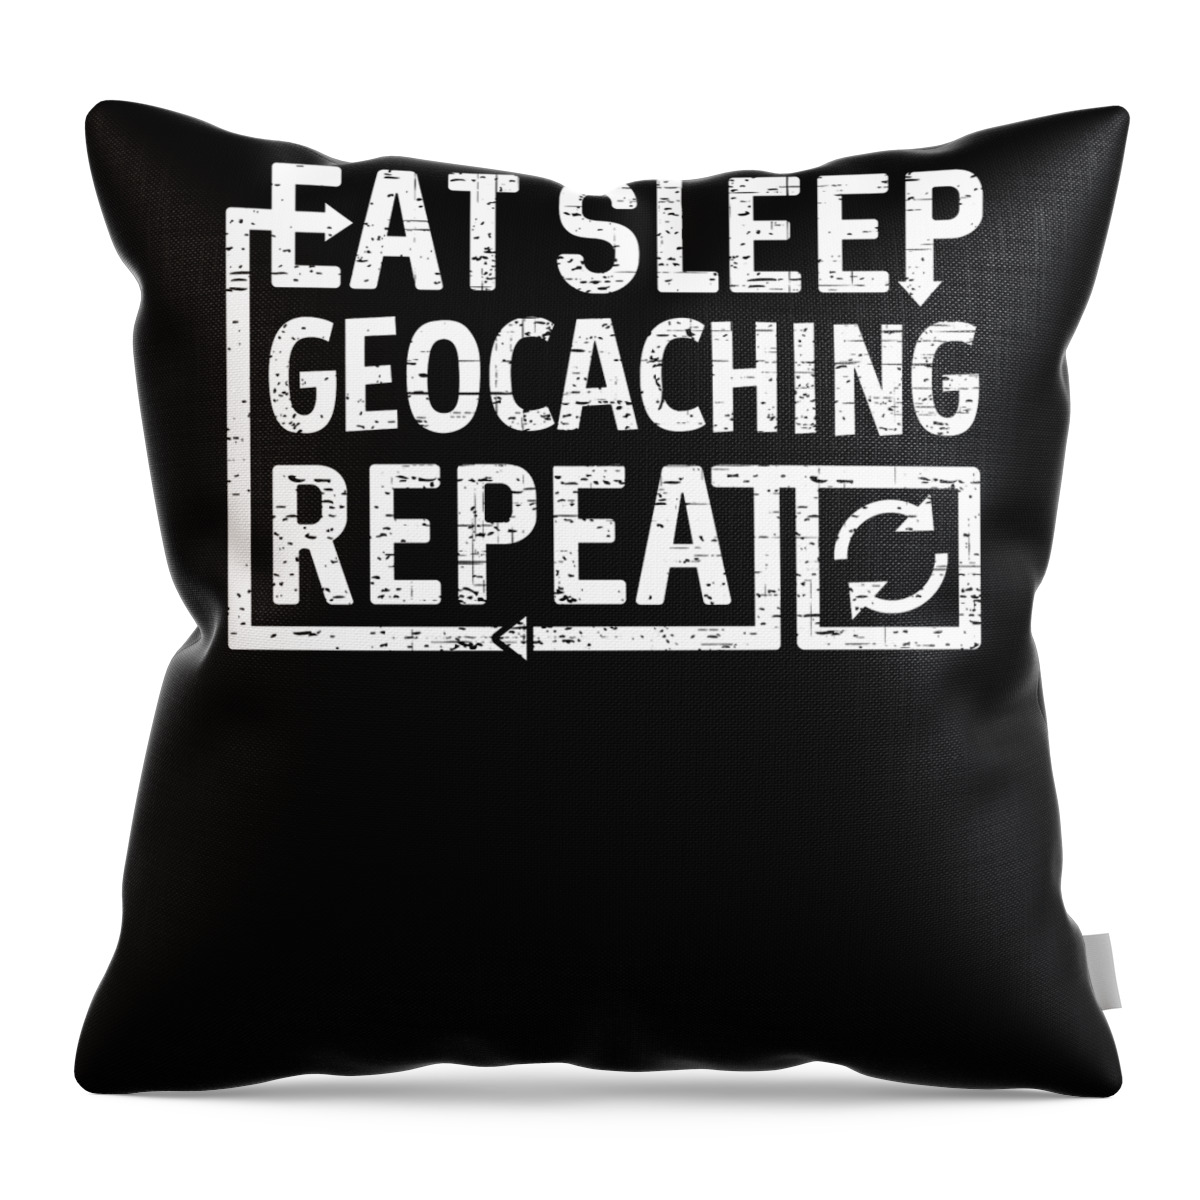 Cool Throw Pillow featuring the digital art Eat Sleep Geocaching by Flippin Sweet Gear